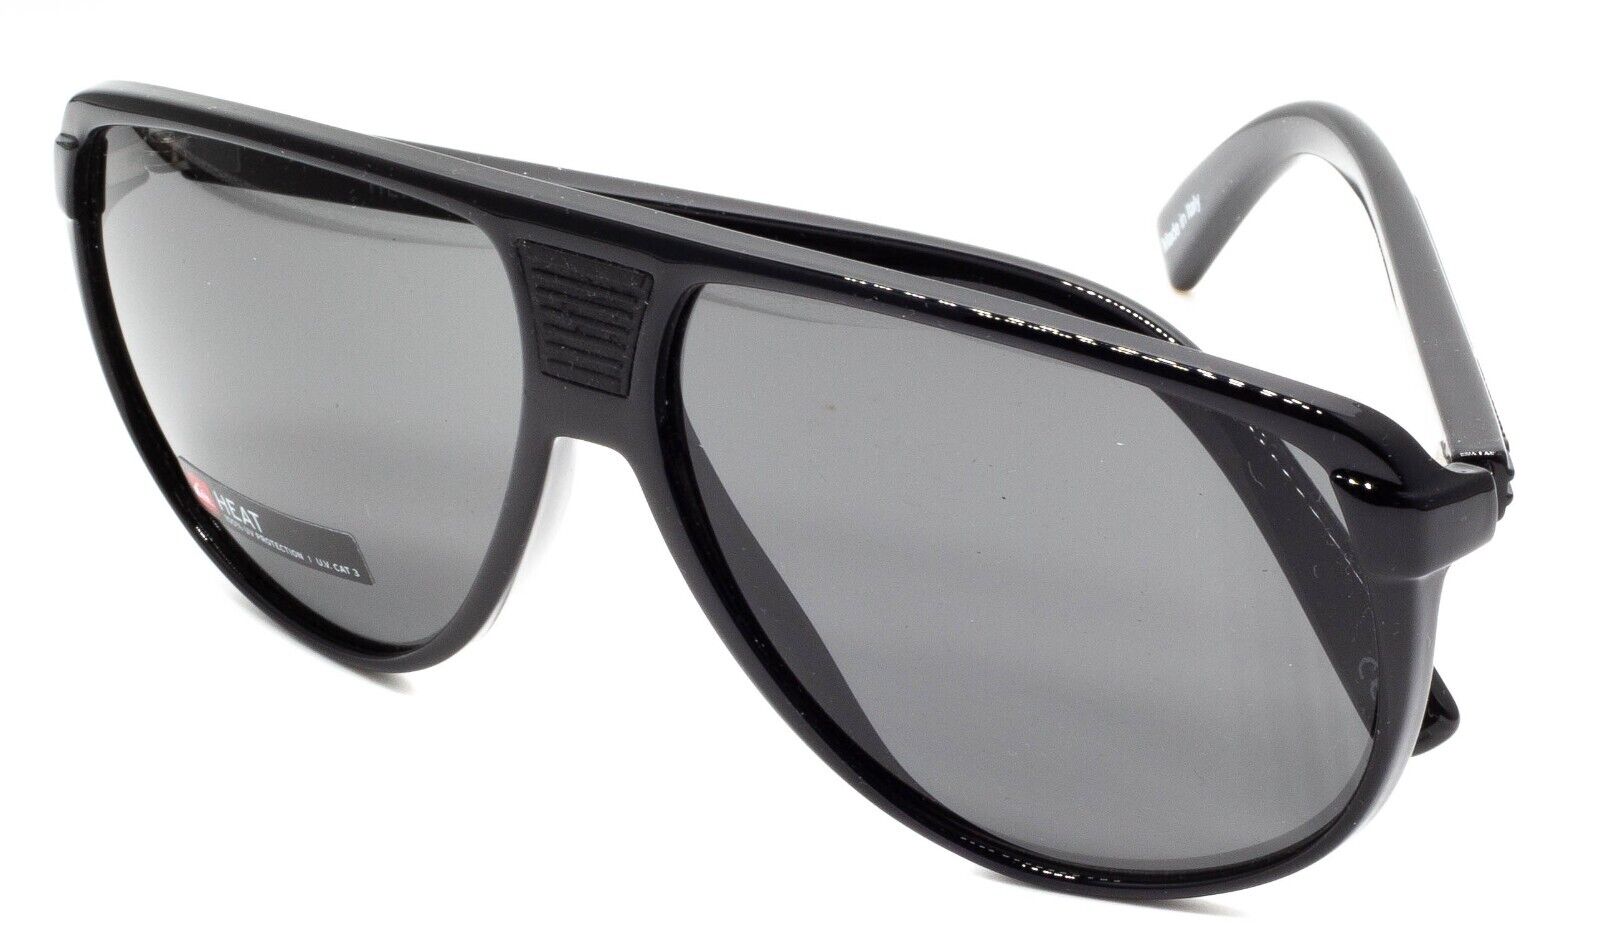 QUIKSILVER HEAT QS1176 229 4231441 59mm Sunglasses Shades Glasses Eyewear  -Italy - GGV Eyewear